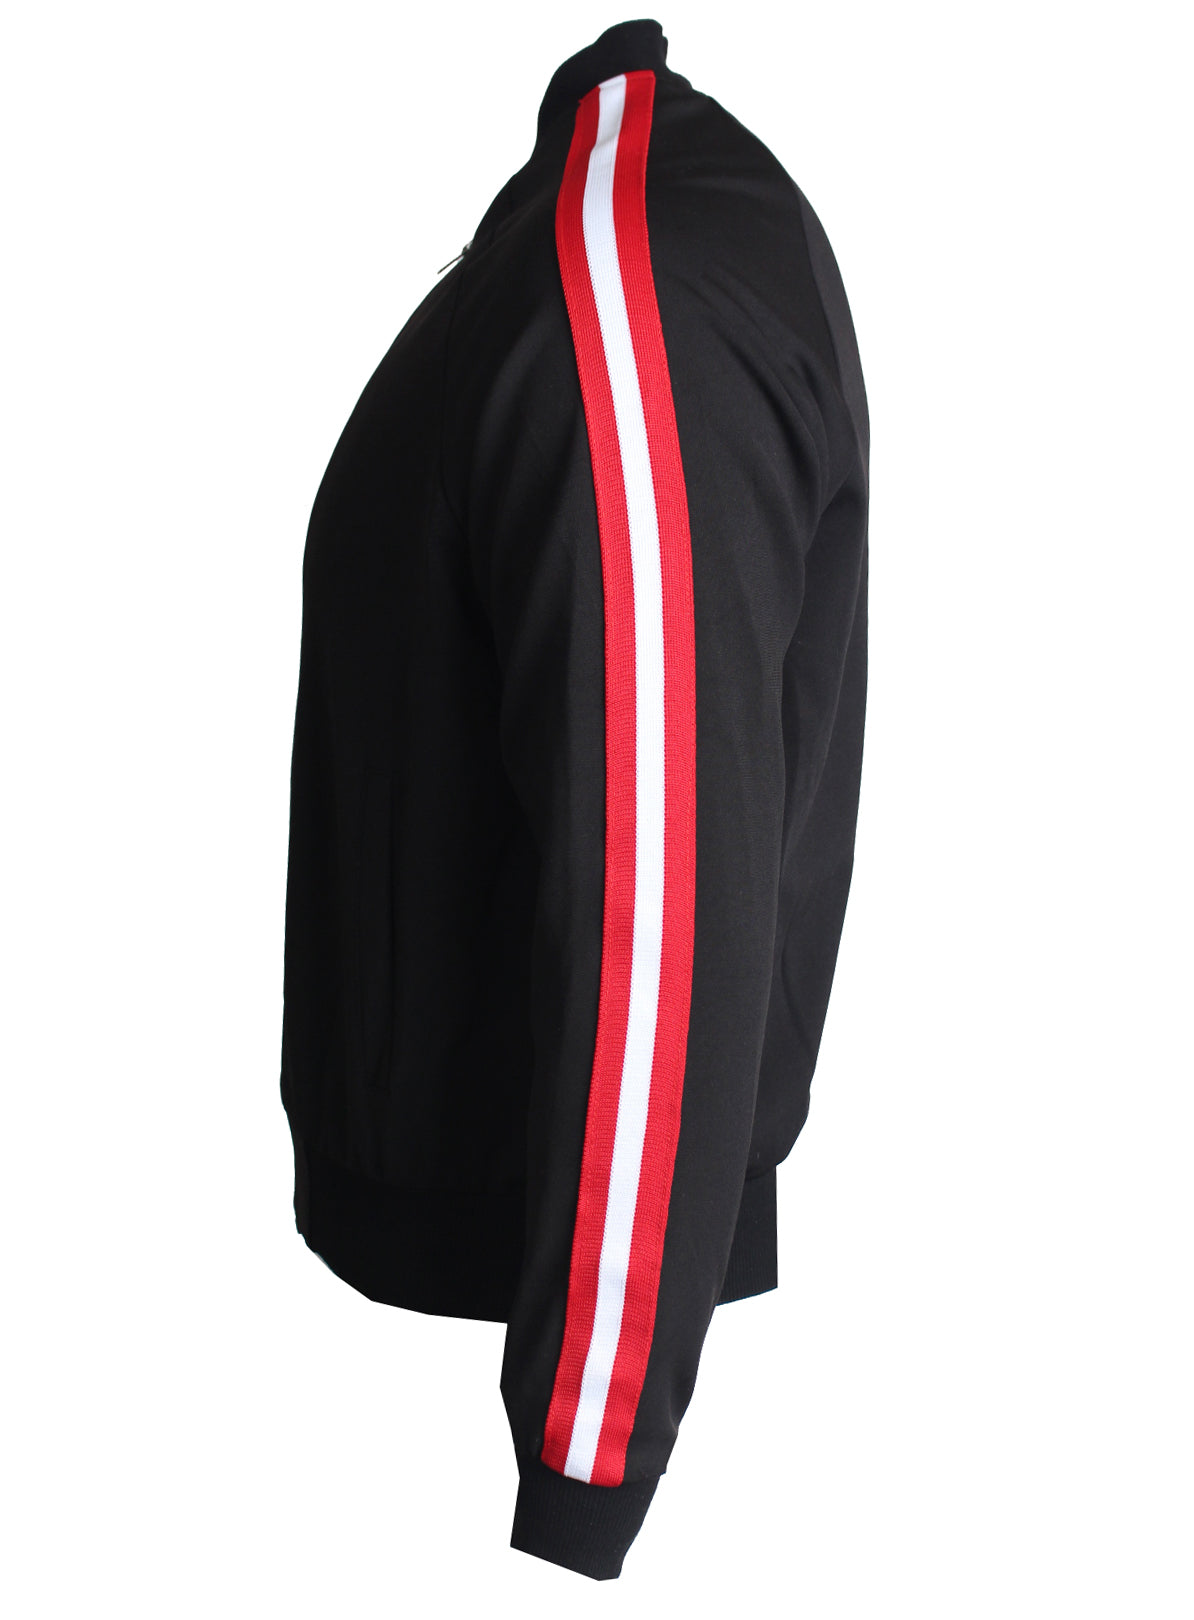 Men's Long Sleeve Track Jacket with Side Stripes-Black